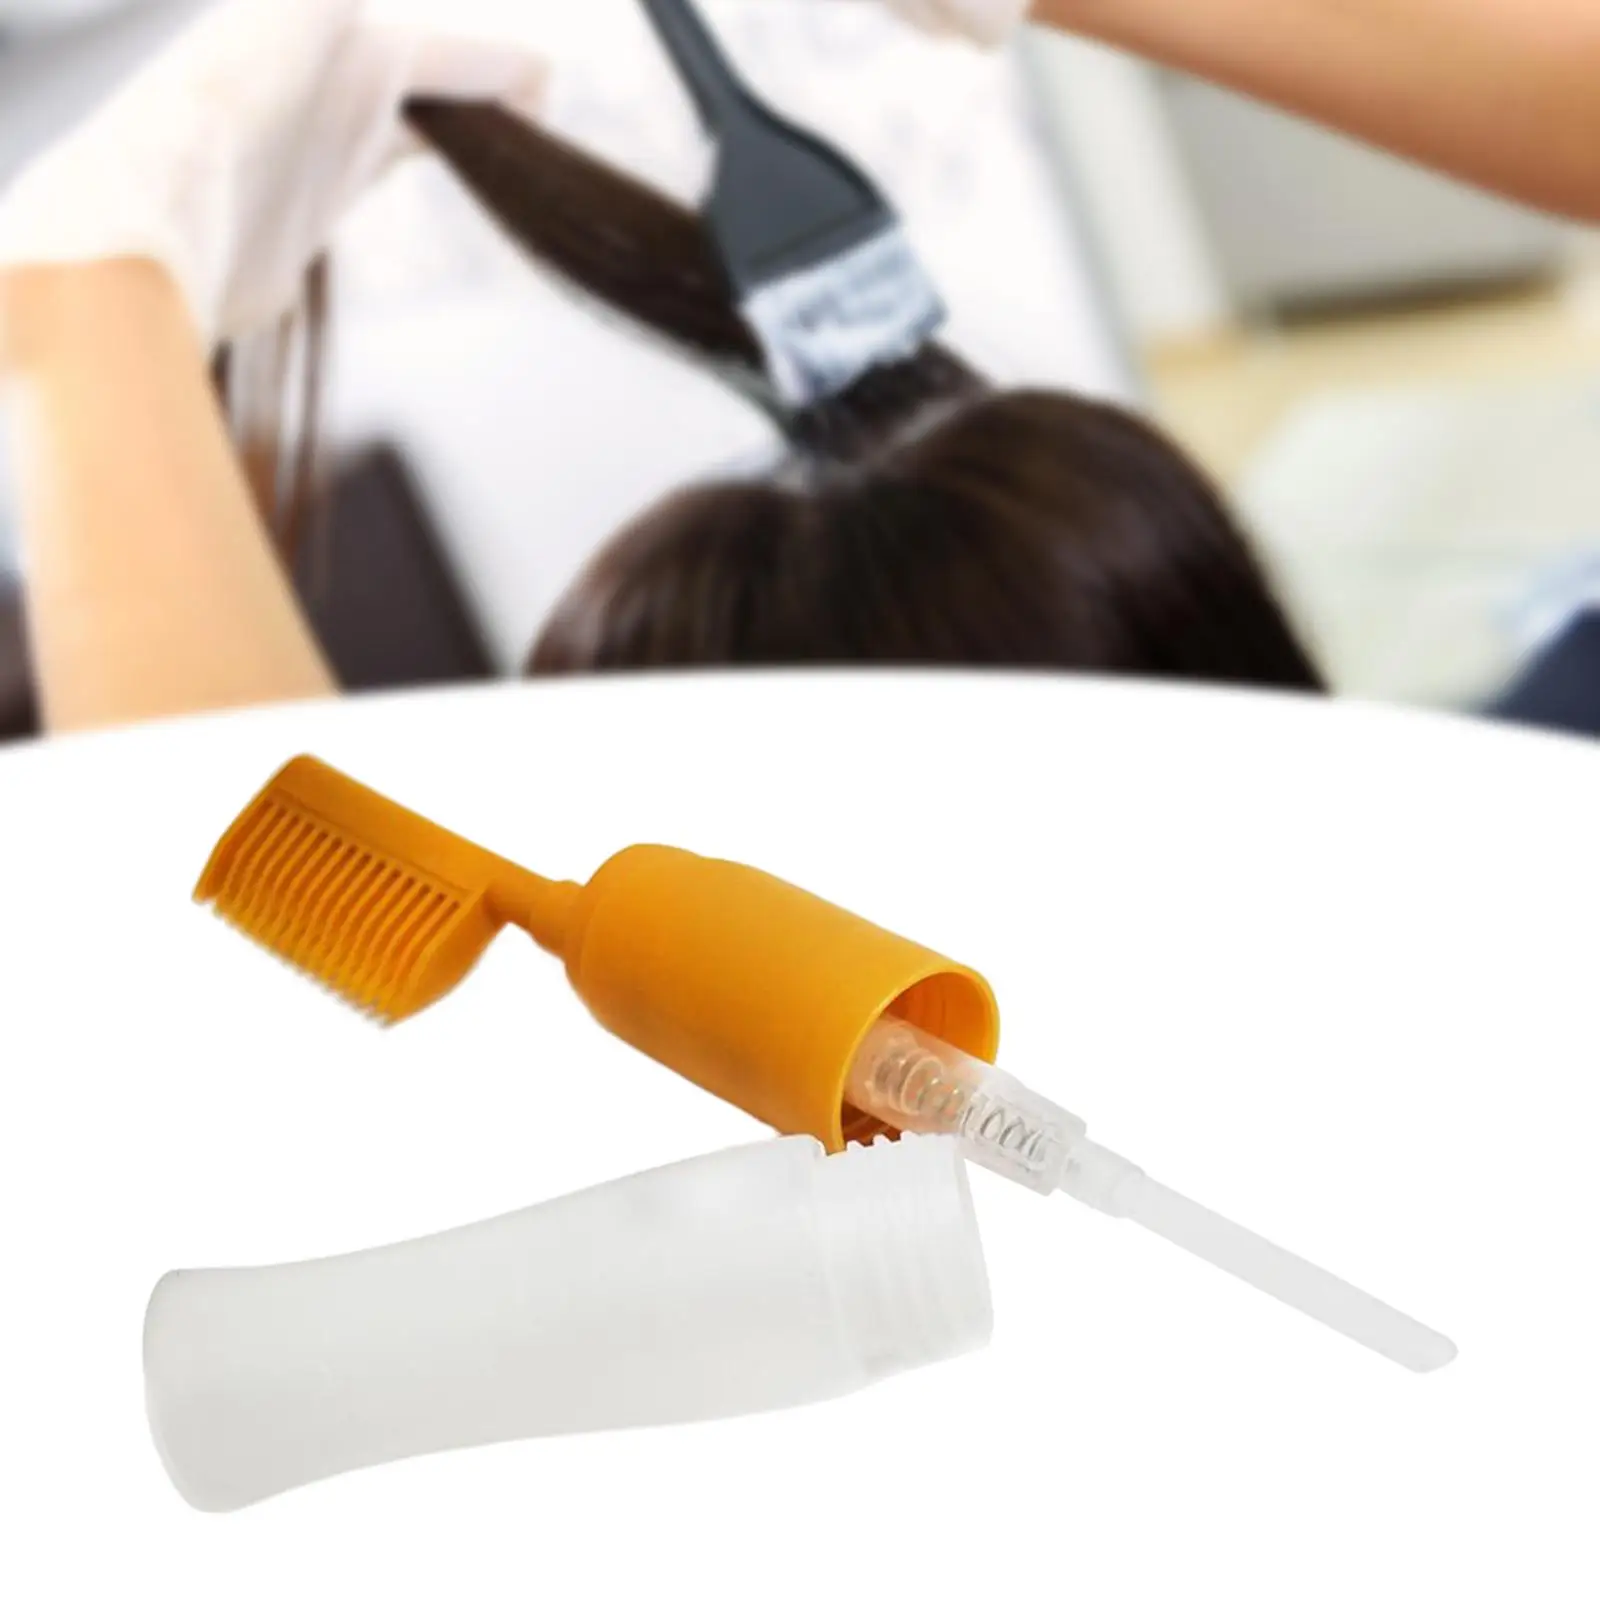 Hair Dye Refillable Bottle Reusable Hair Coloring Applicator Comb for Styling Salon